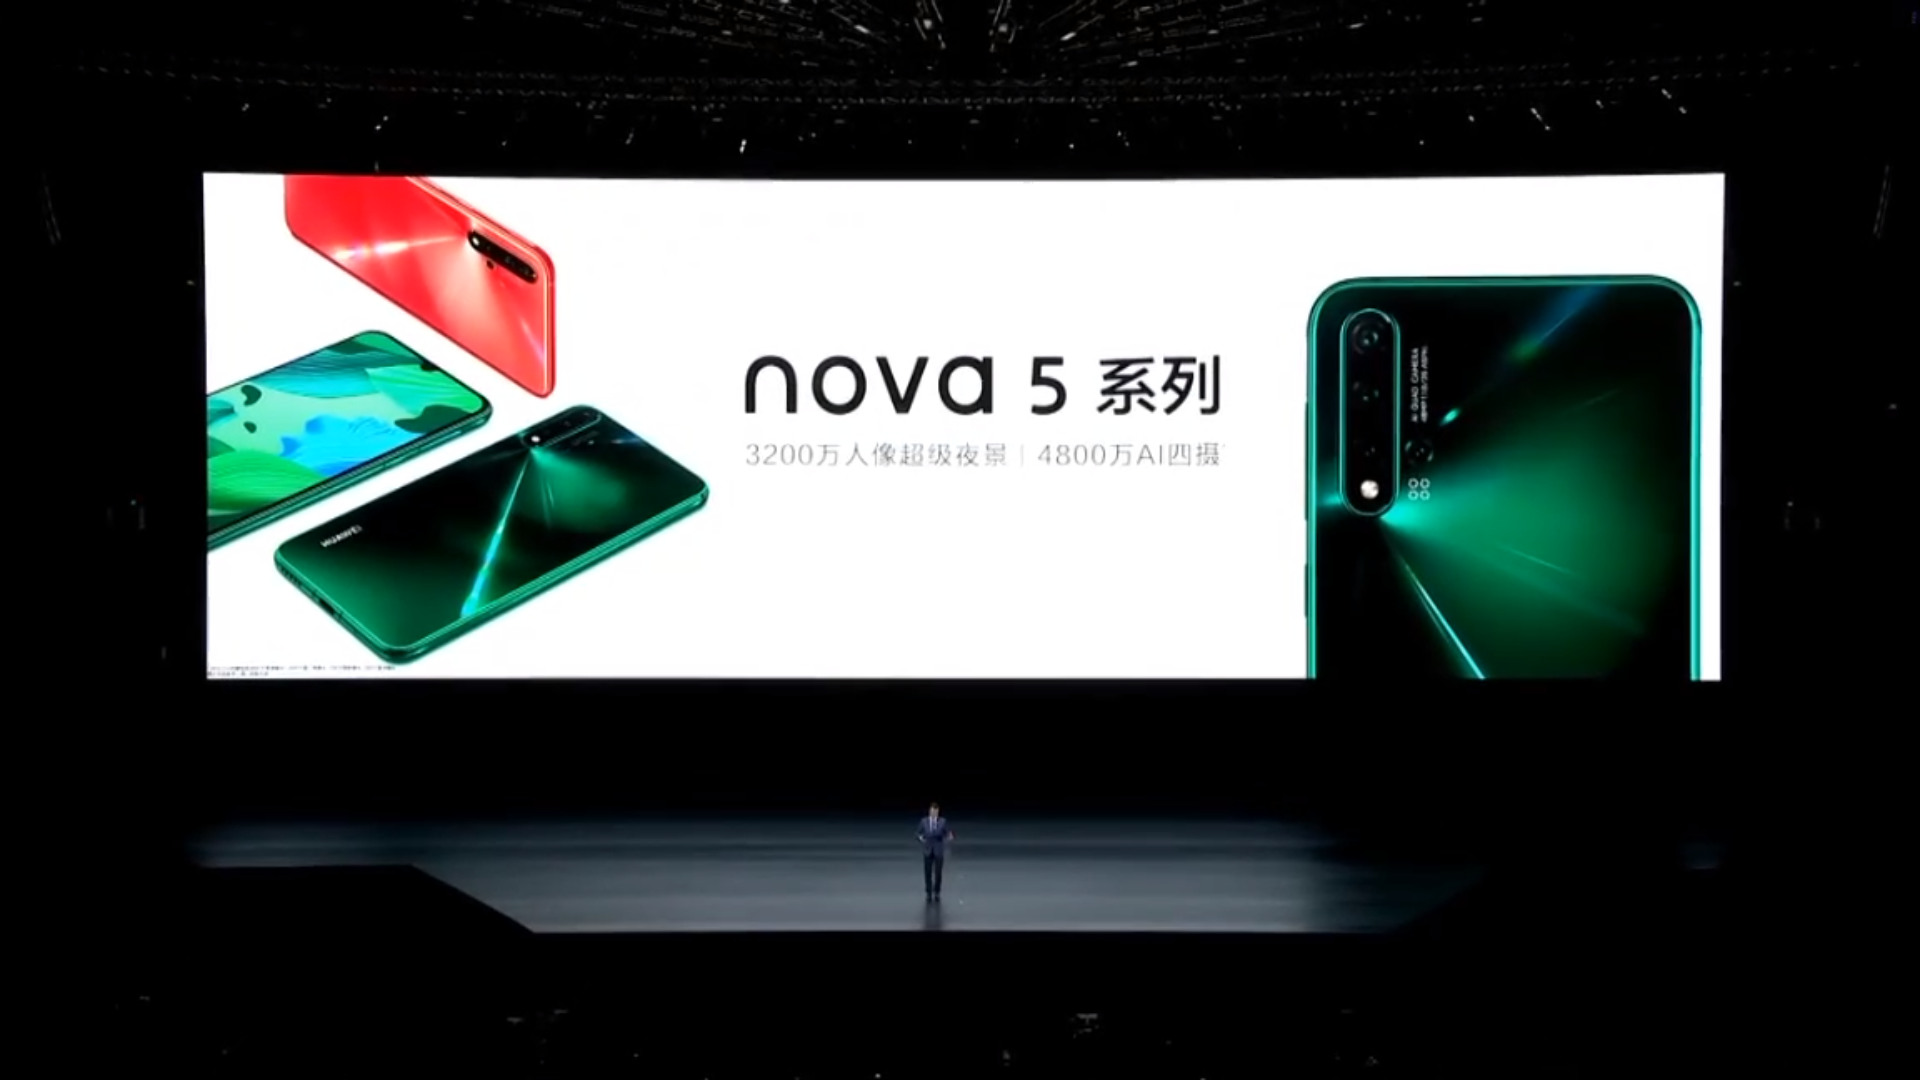 The Huawei Nova 5 Pro is part of the Nova 5 series.